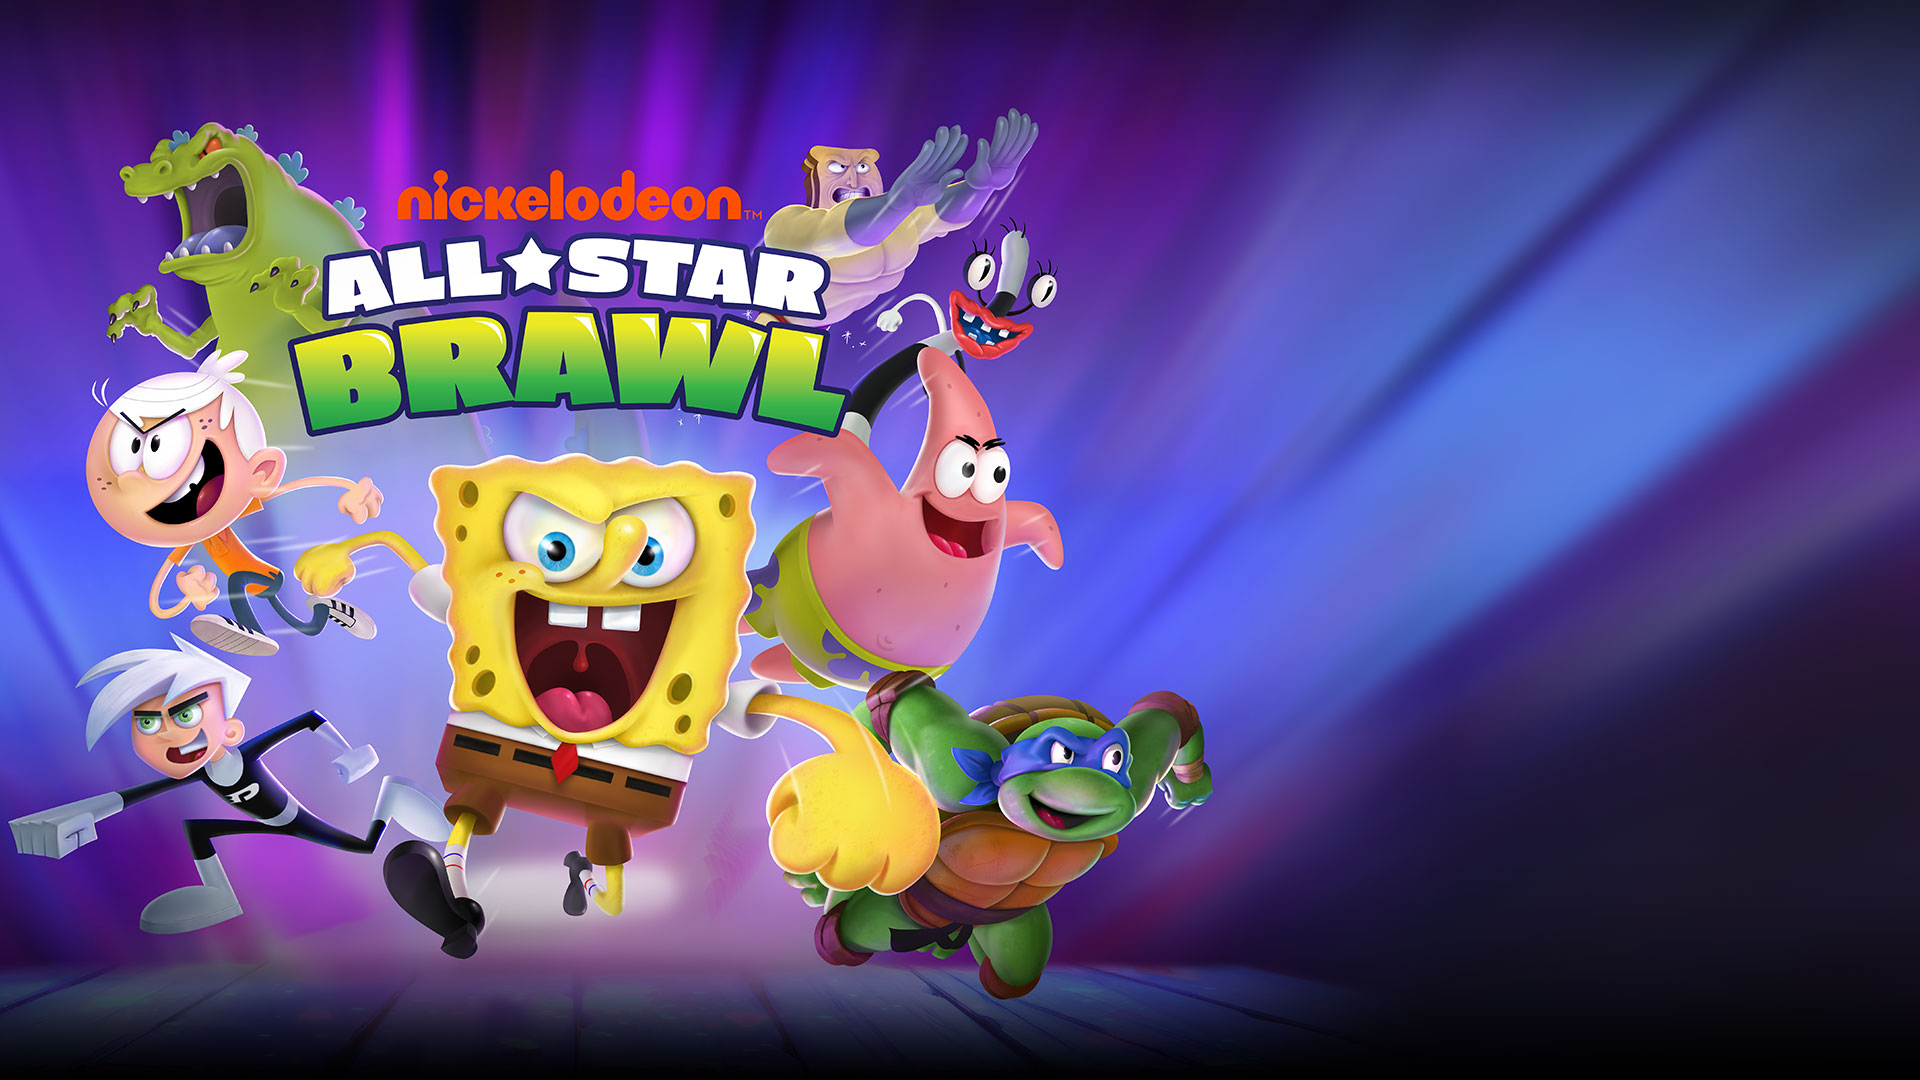 《Nickelodeon All-Star Brawl》，海绵宝宝、忍者神龟莱昂纳多、幻影丹尼和其他 Nickelodeon 明星向前迈进准备战斗